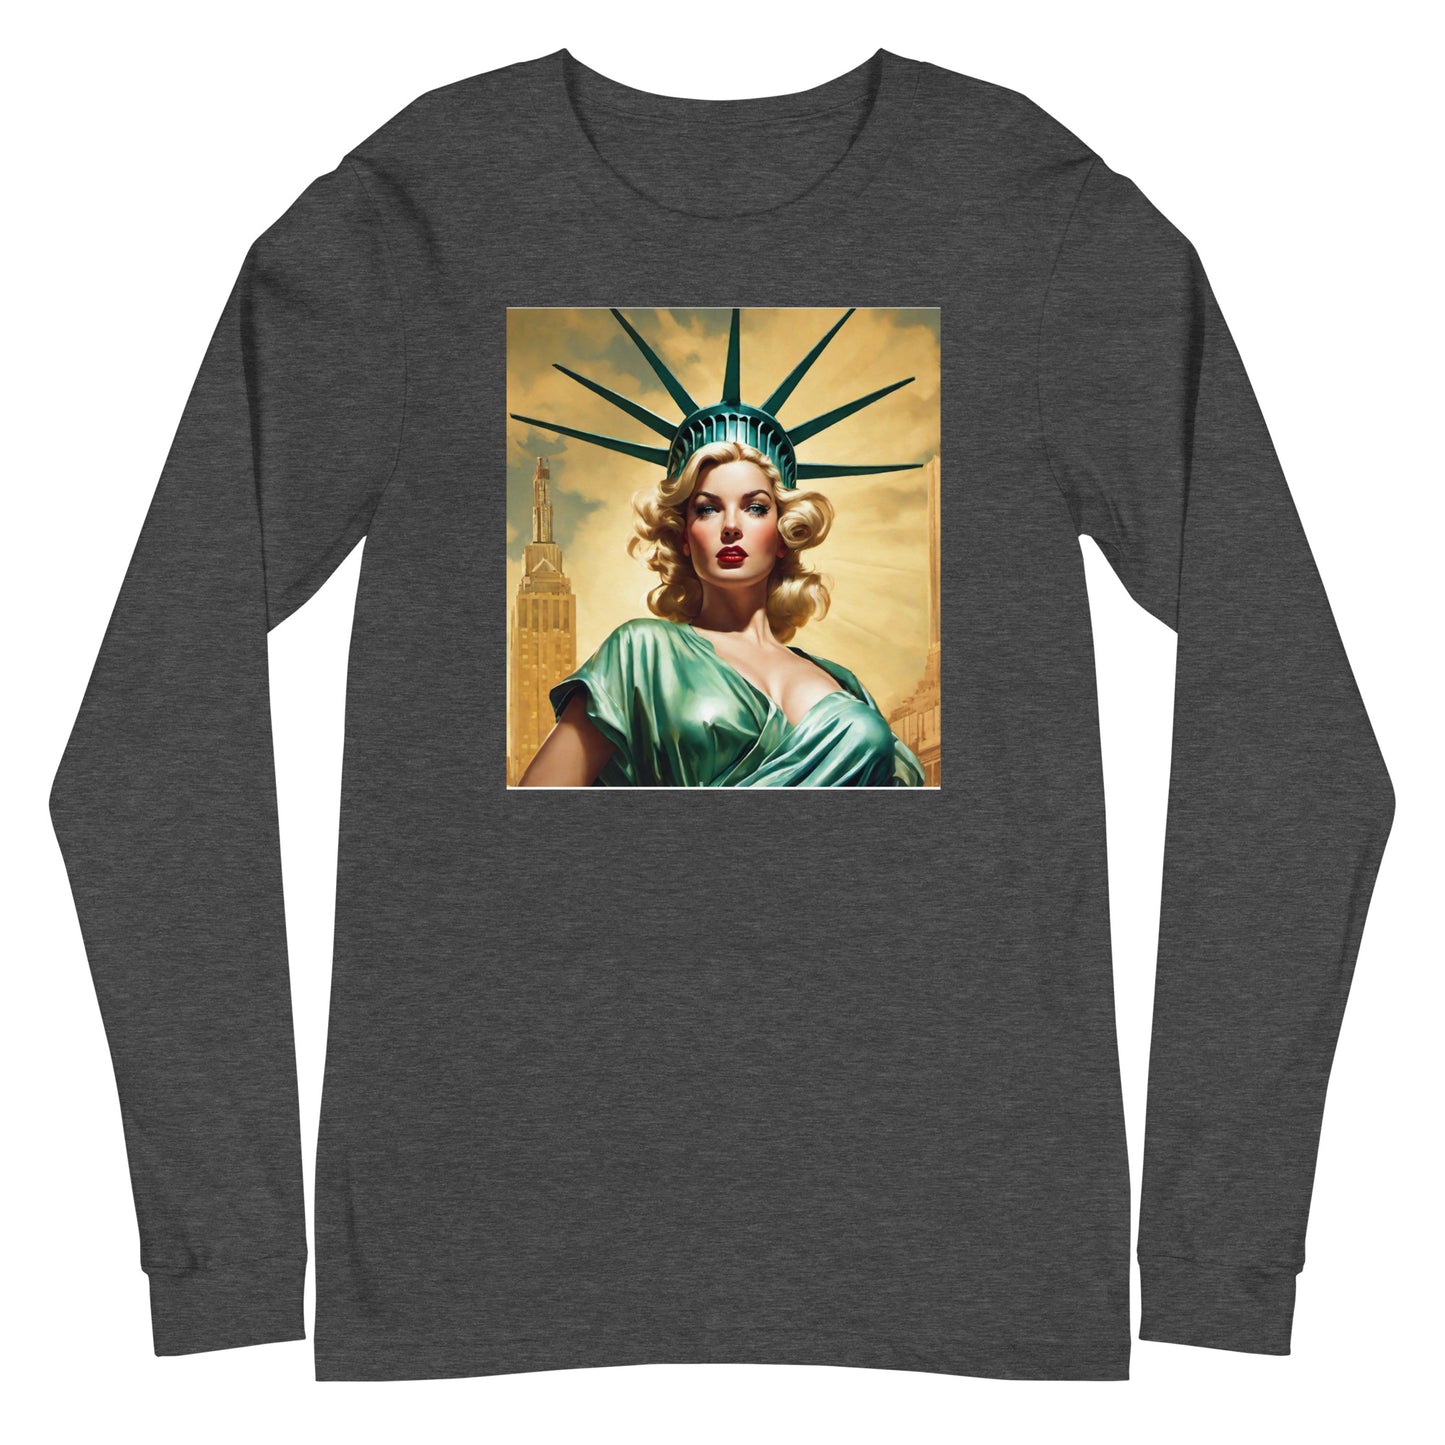 Beautiful Lady Liberty Long Sleeve Tee Dark Grey Heather